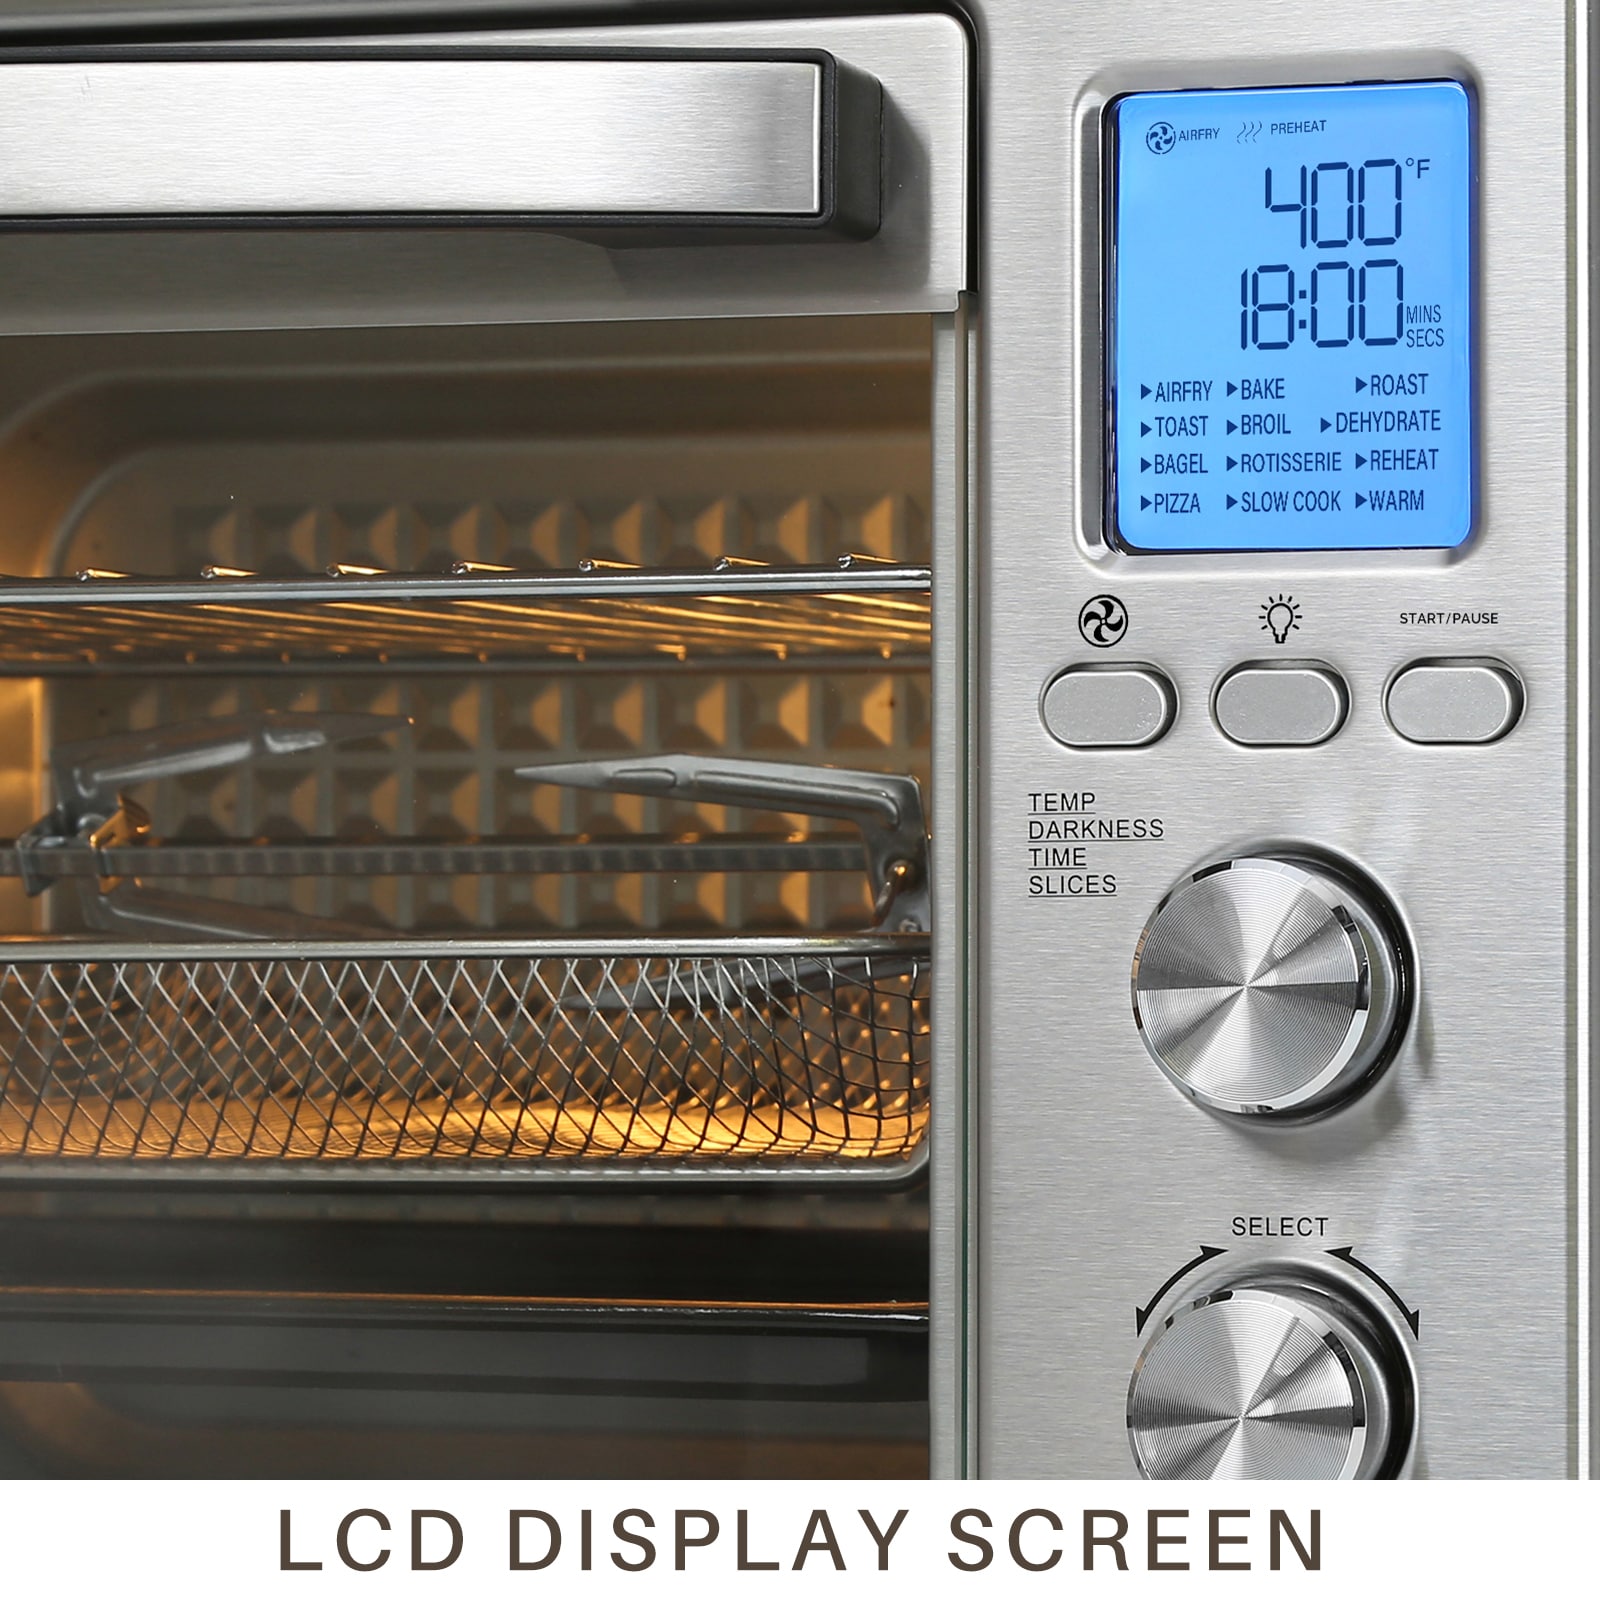 Cosori Smart Air Fryer Toaster Oven, 32-qt, Bluetooth, Rotisserie Brand New